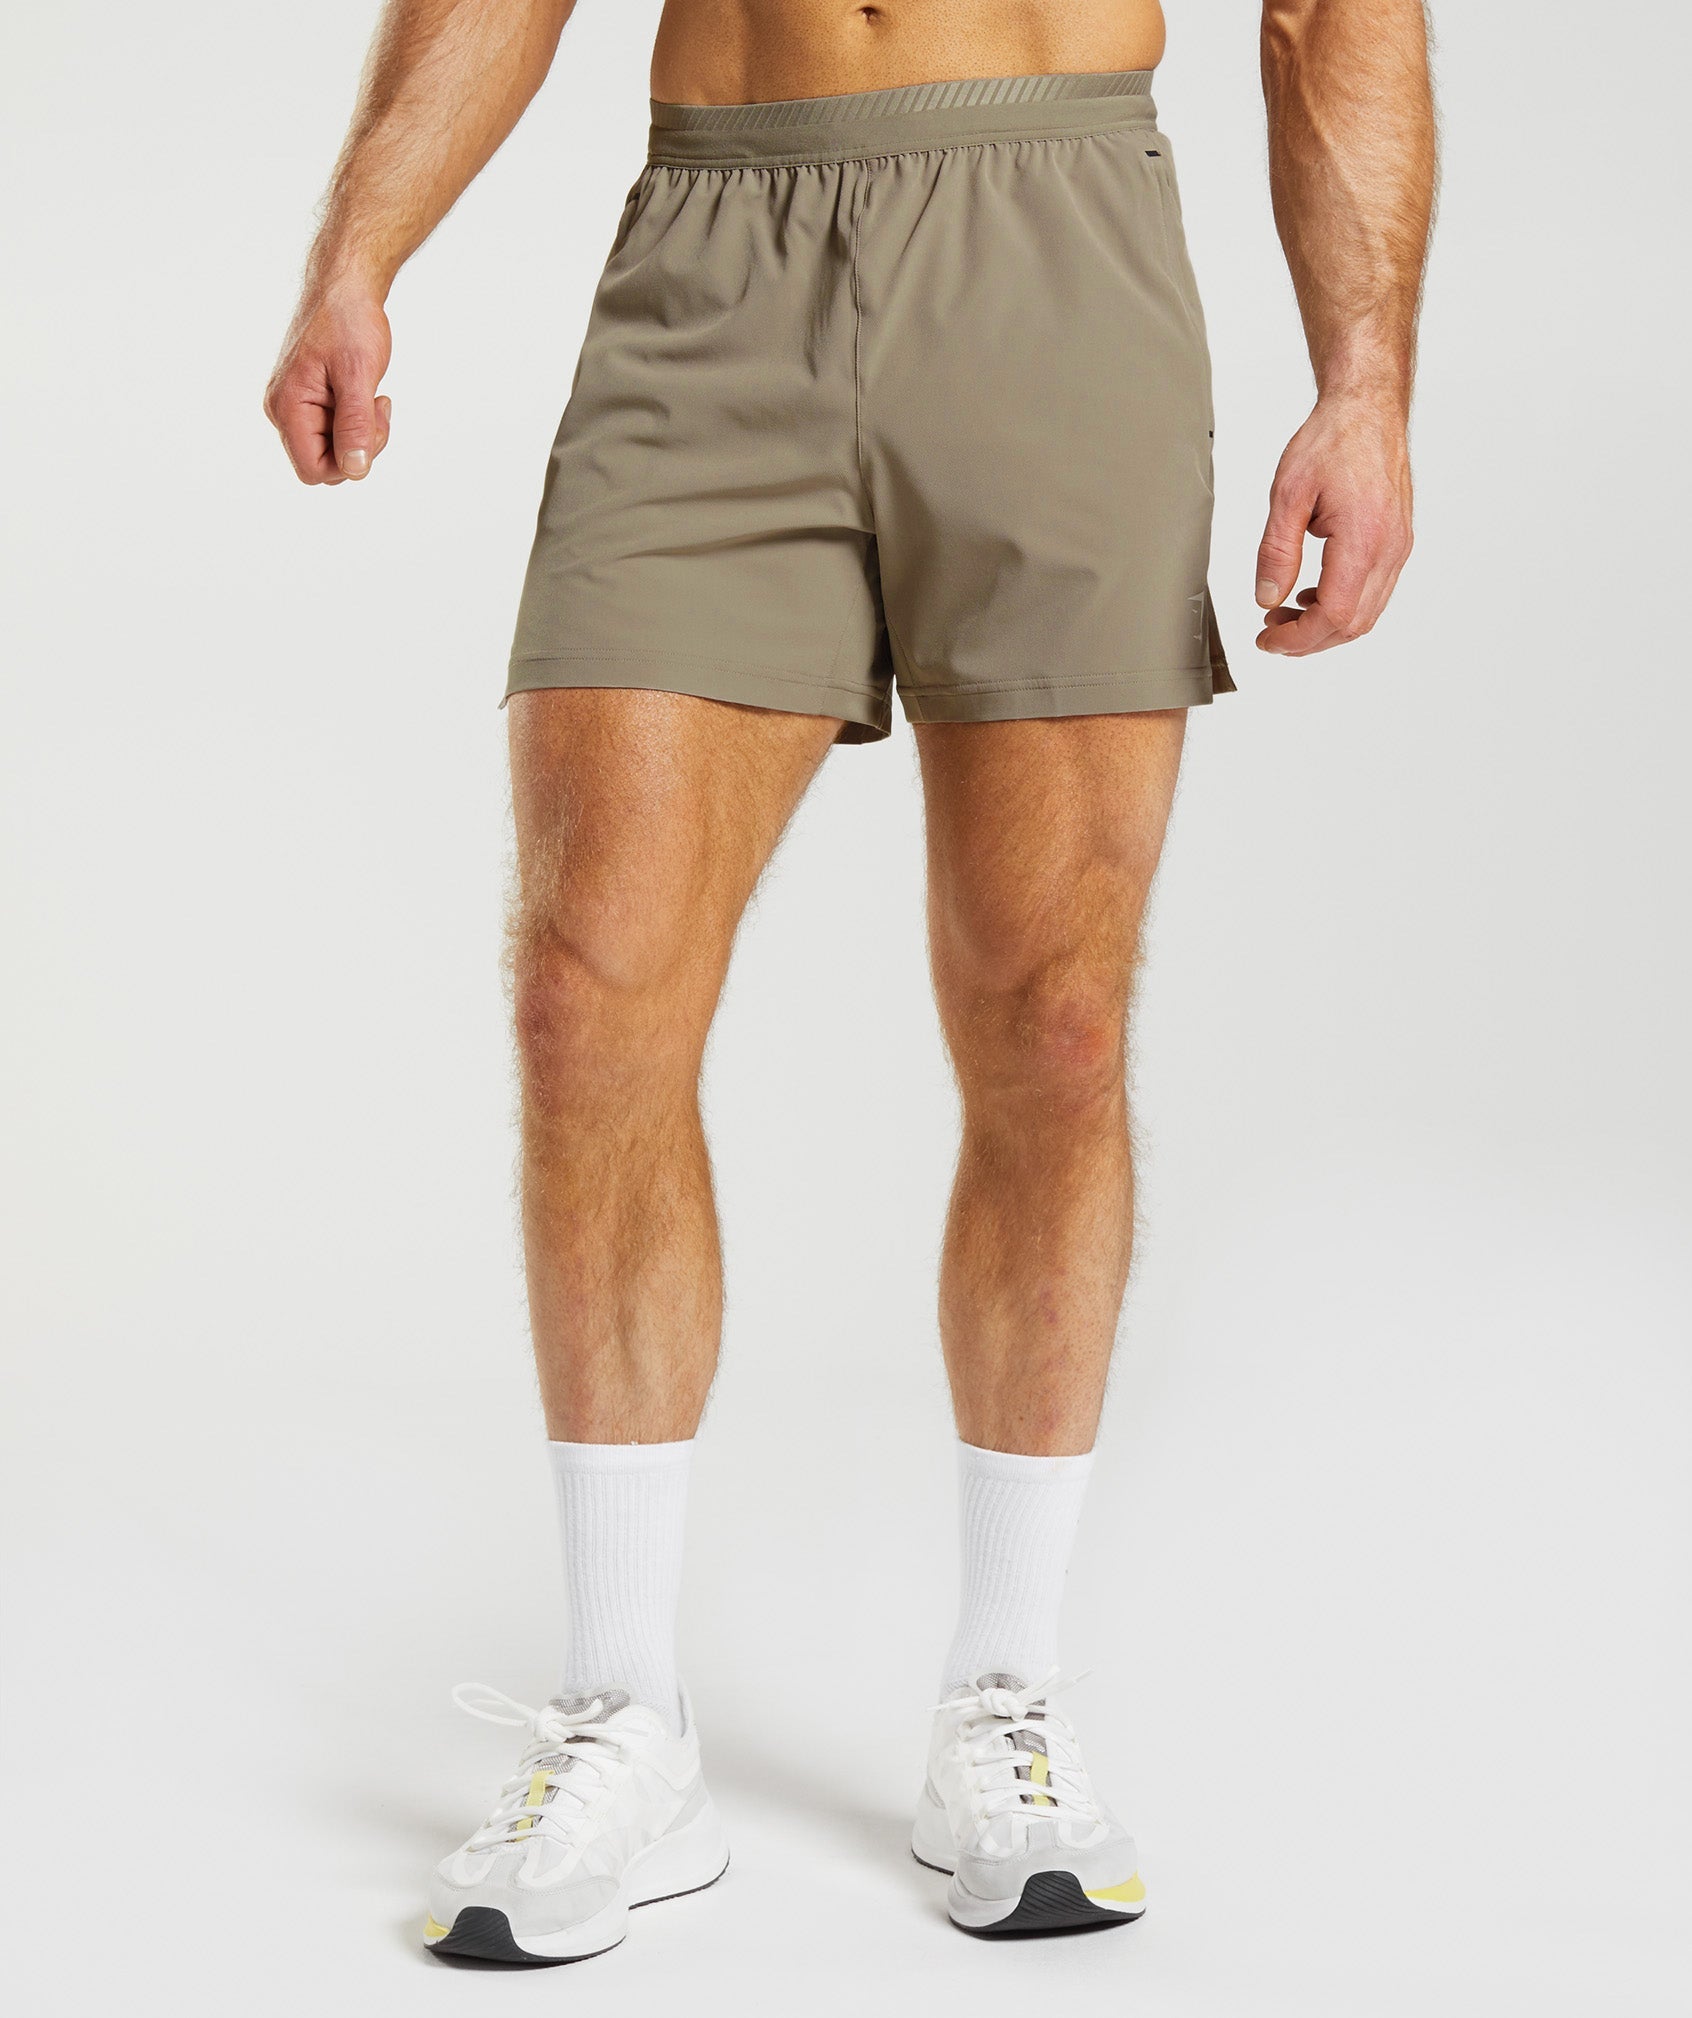 Gymshark Apex 5 Hybrid Shorts - Earthy Brown